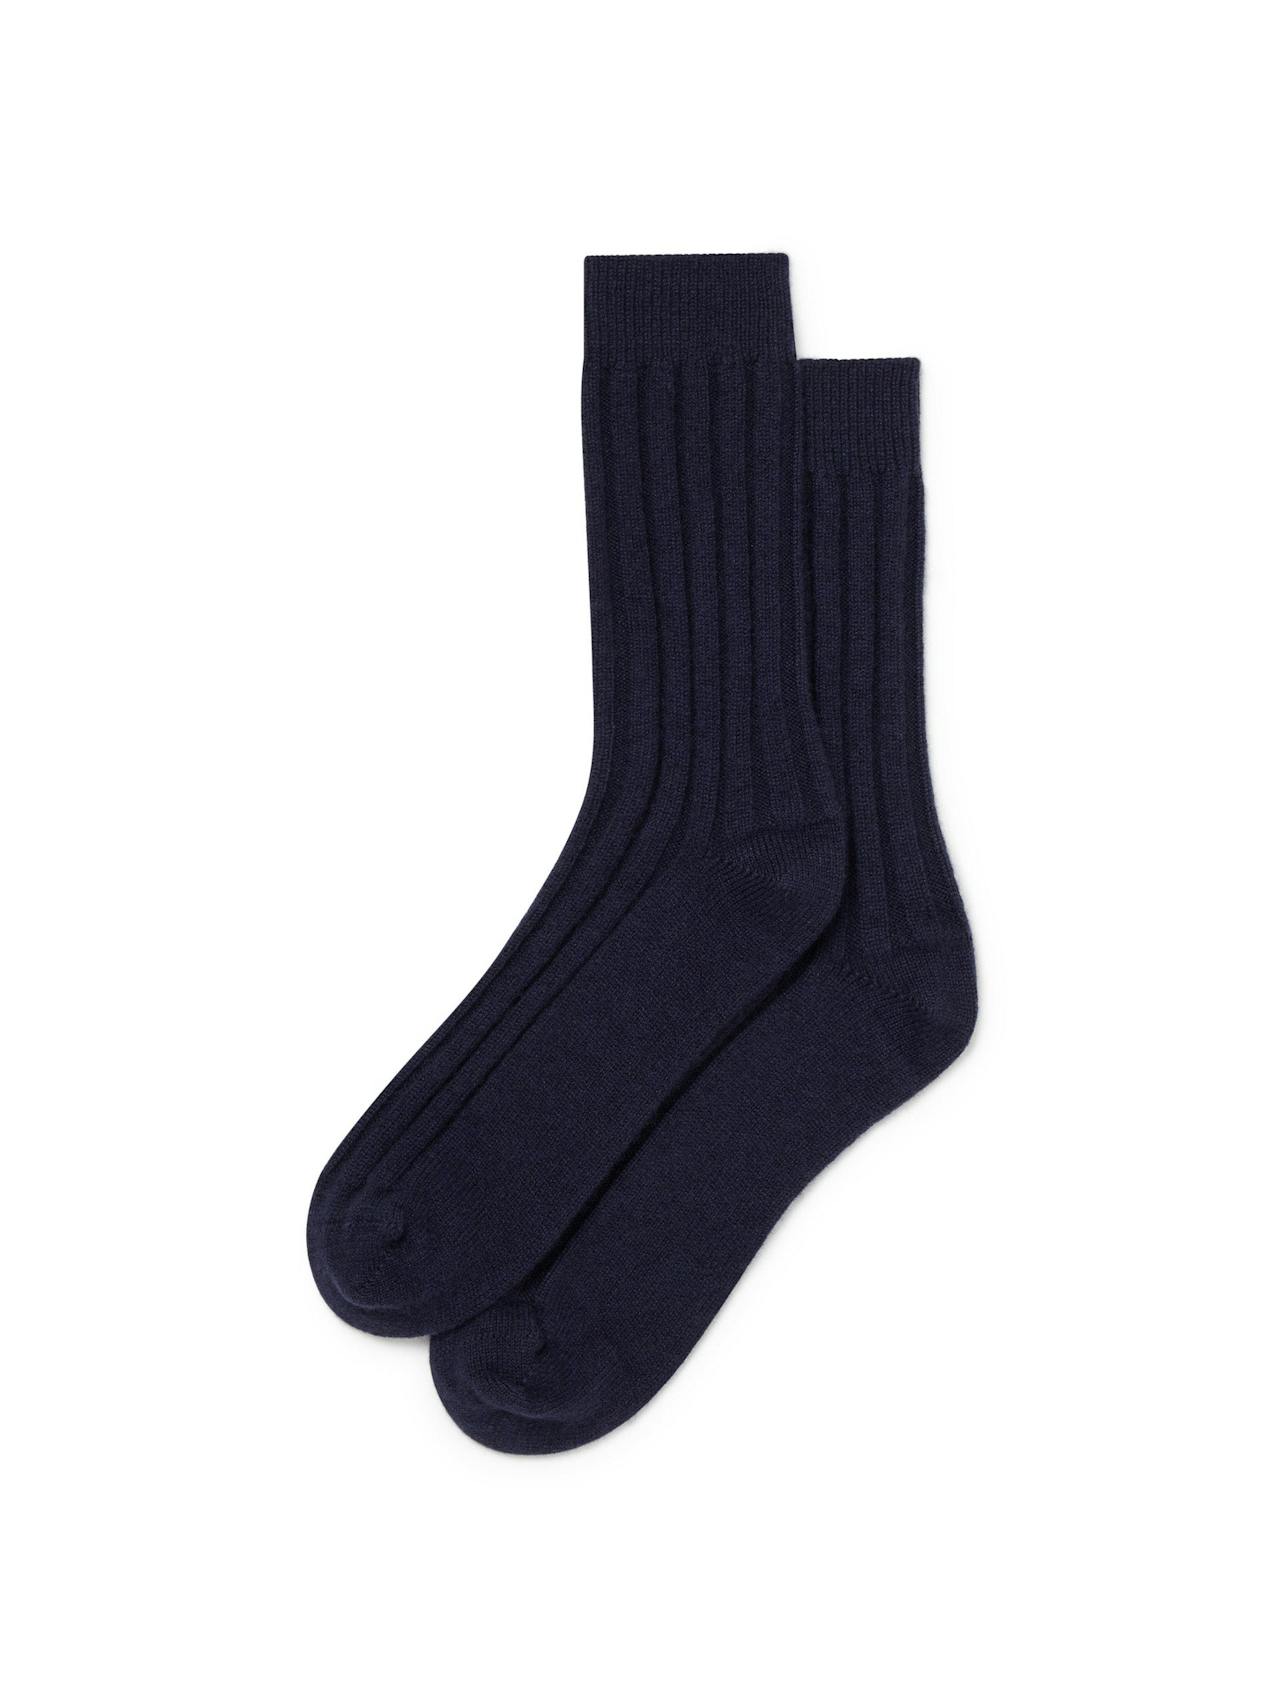 Men's navy cashmere sock